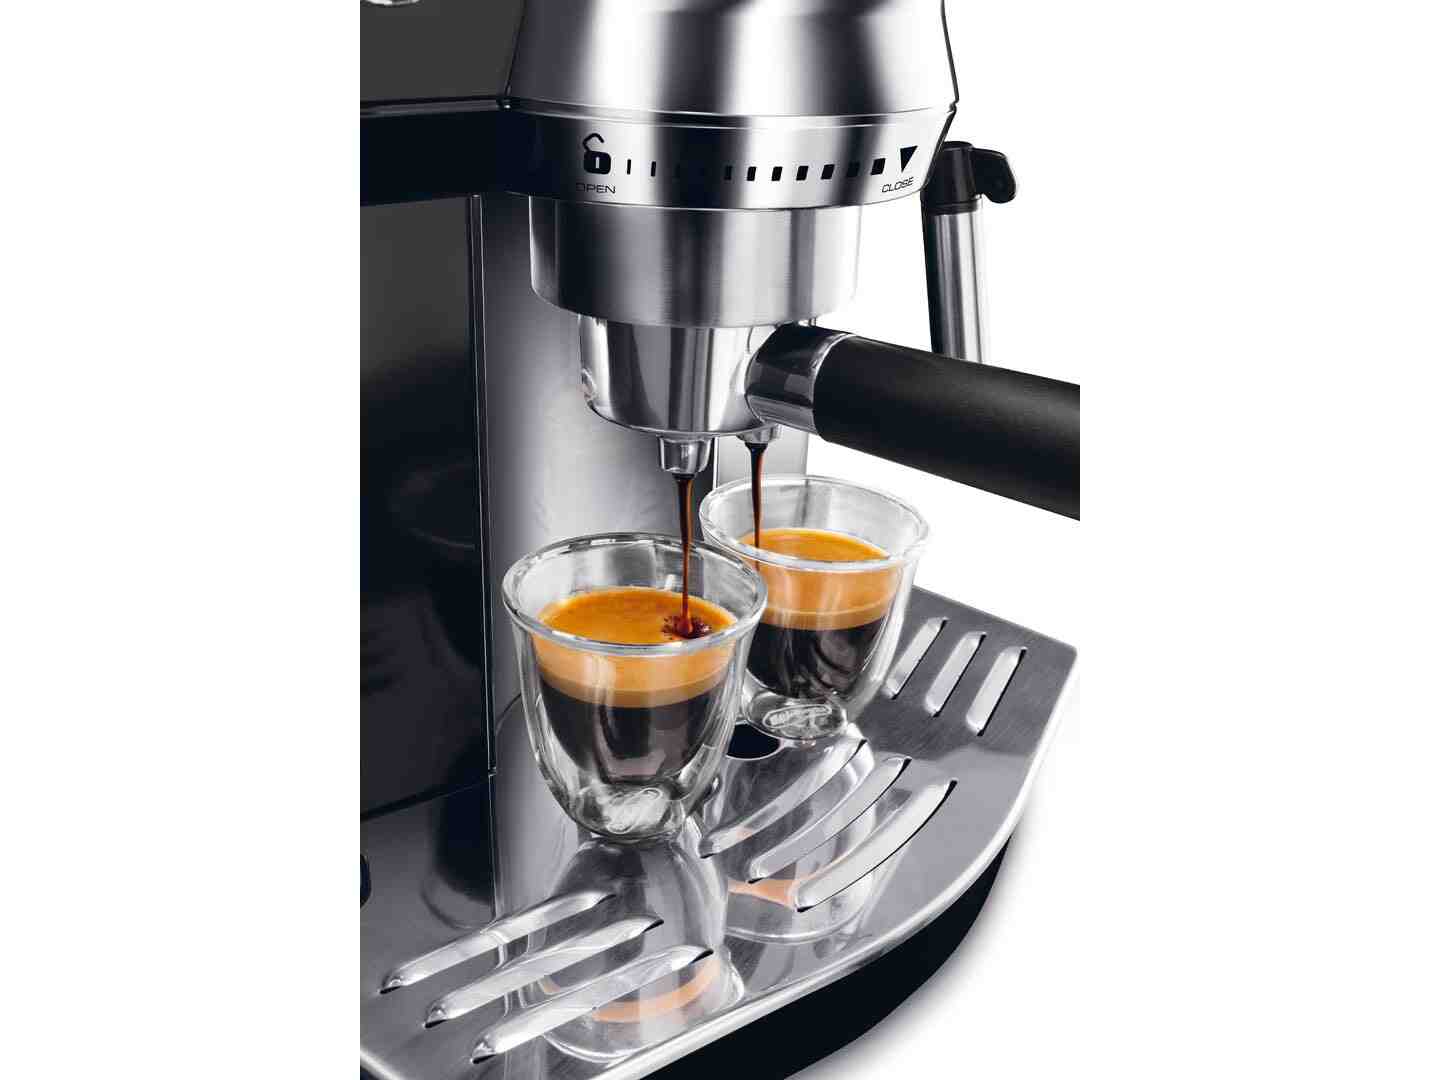 DELONGHI EC-820B PUMP ESPRESSO COFFEE MACHINE (220V)